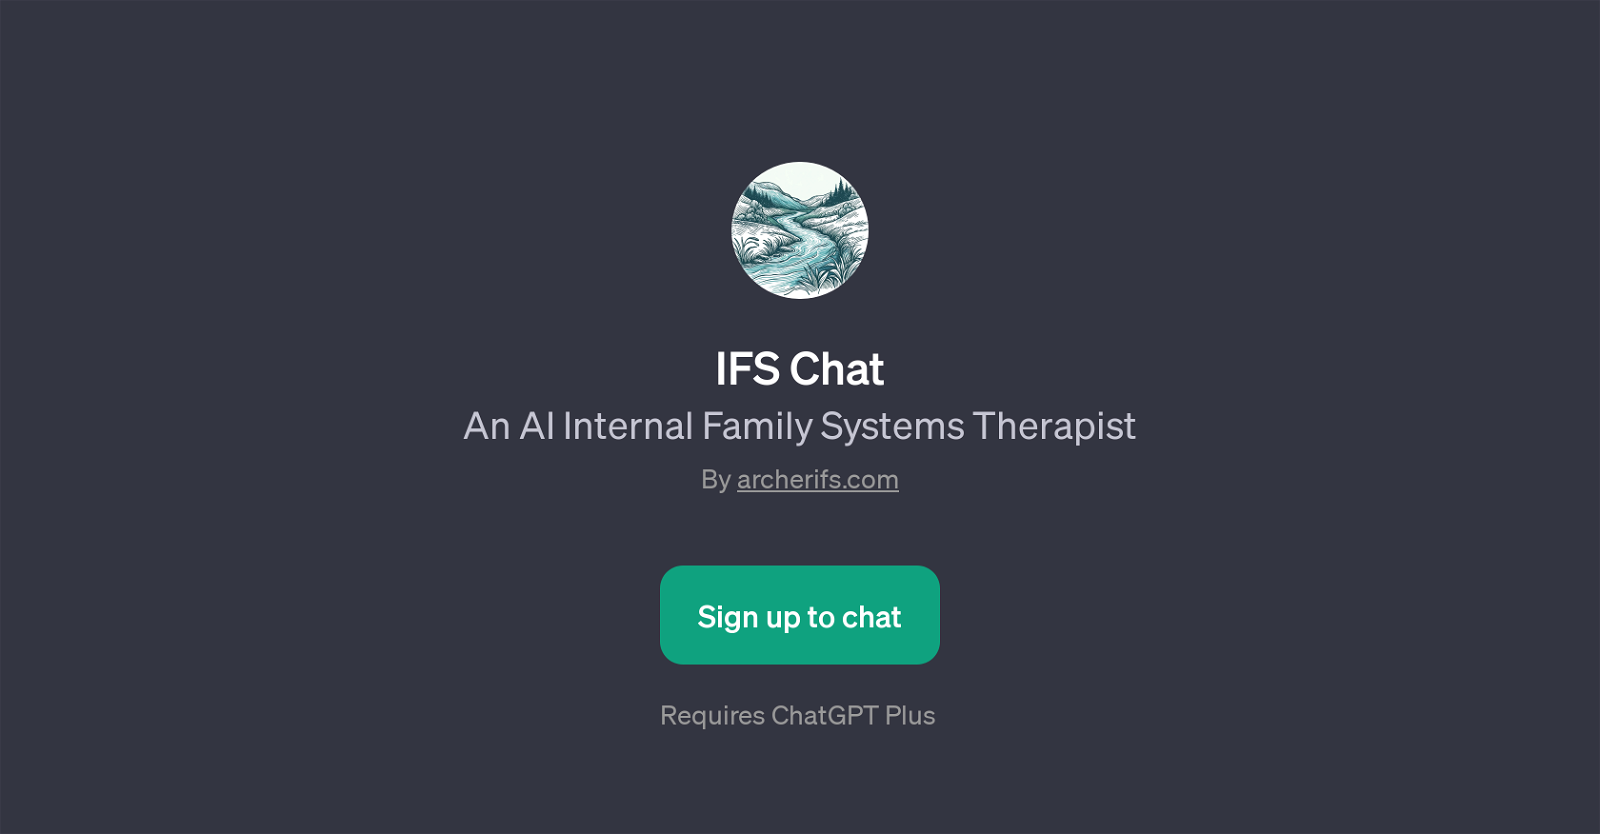 IFS Chat website